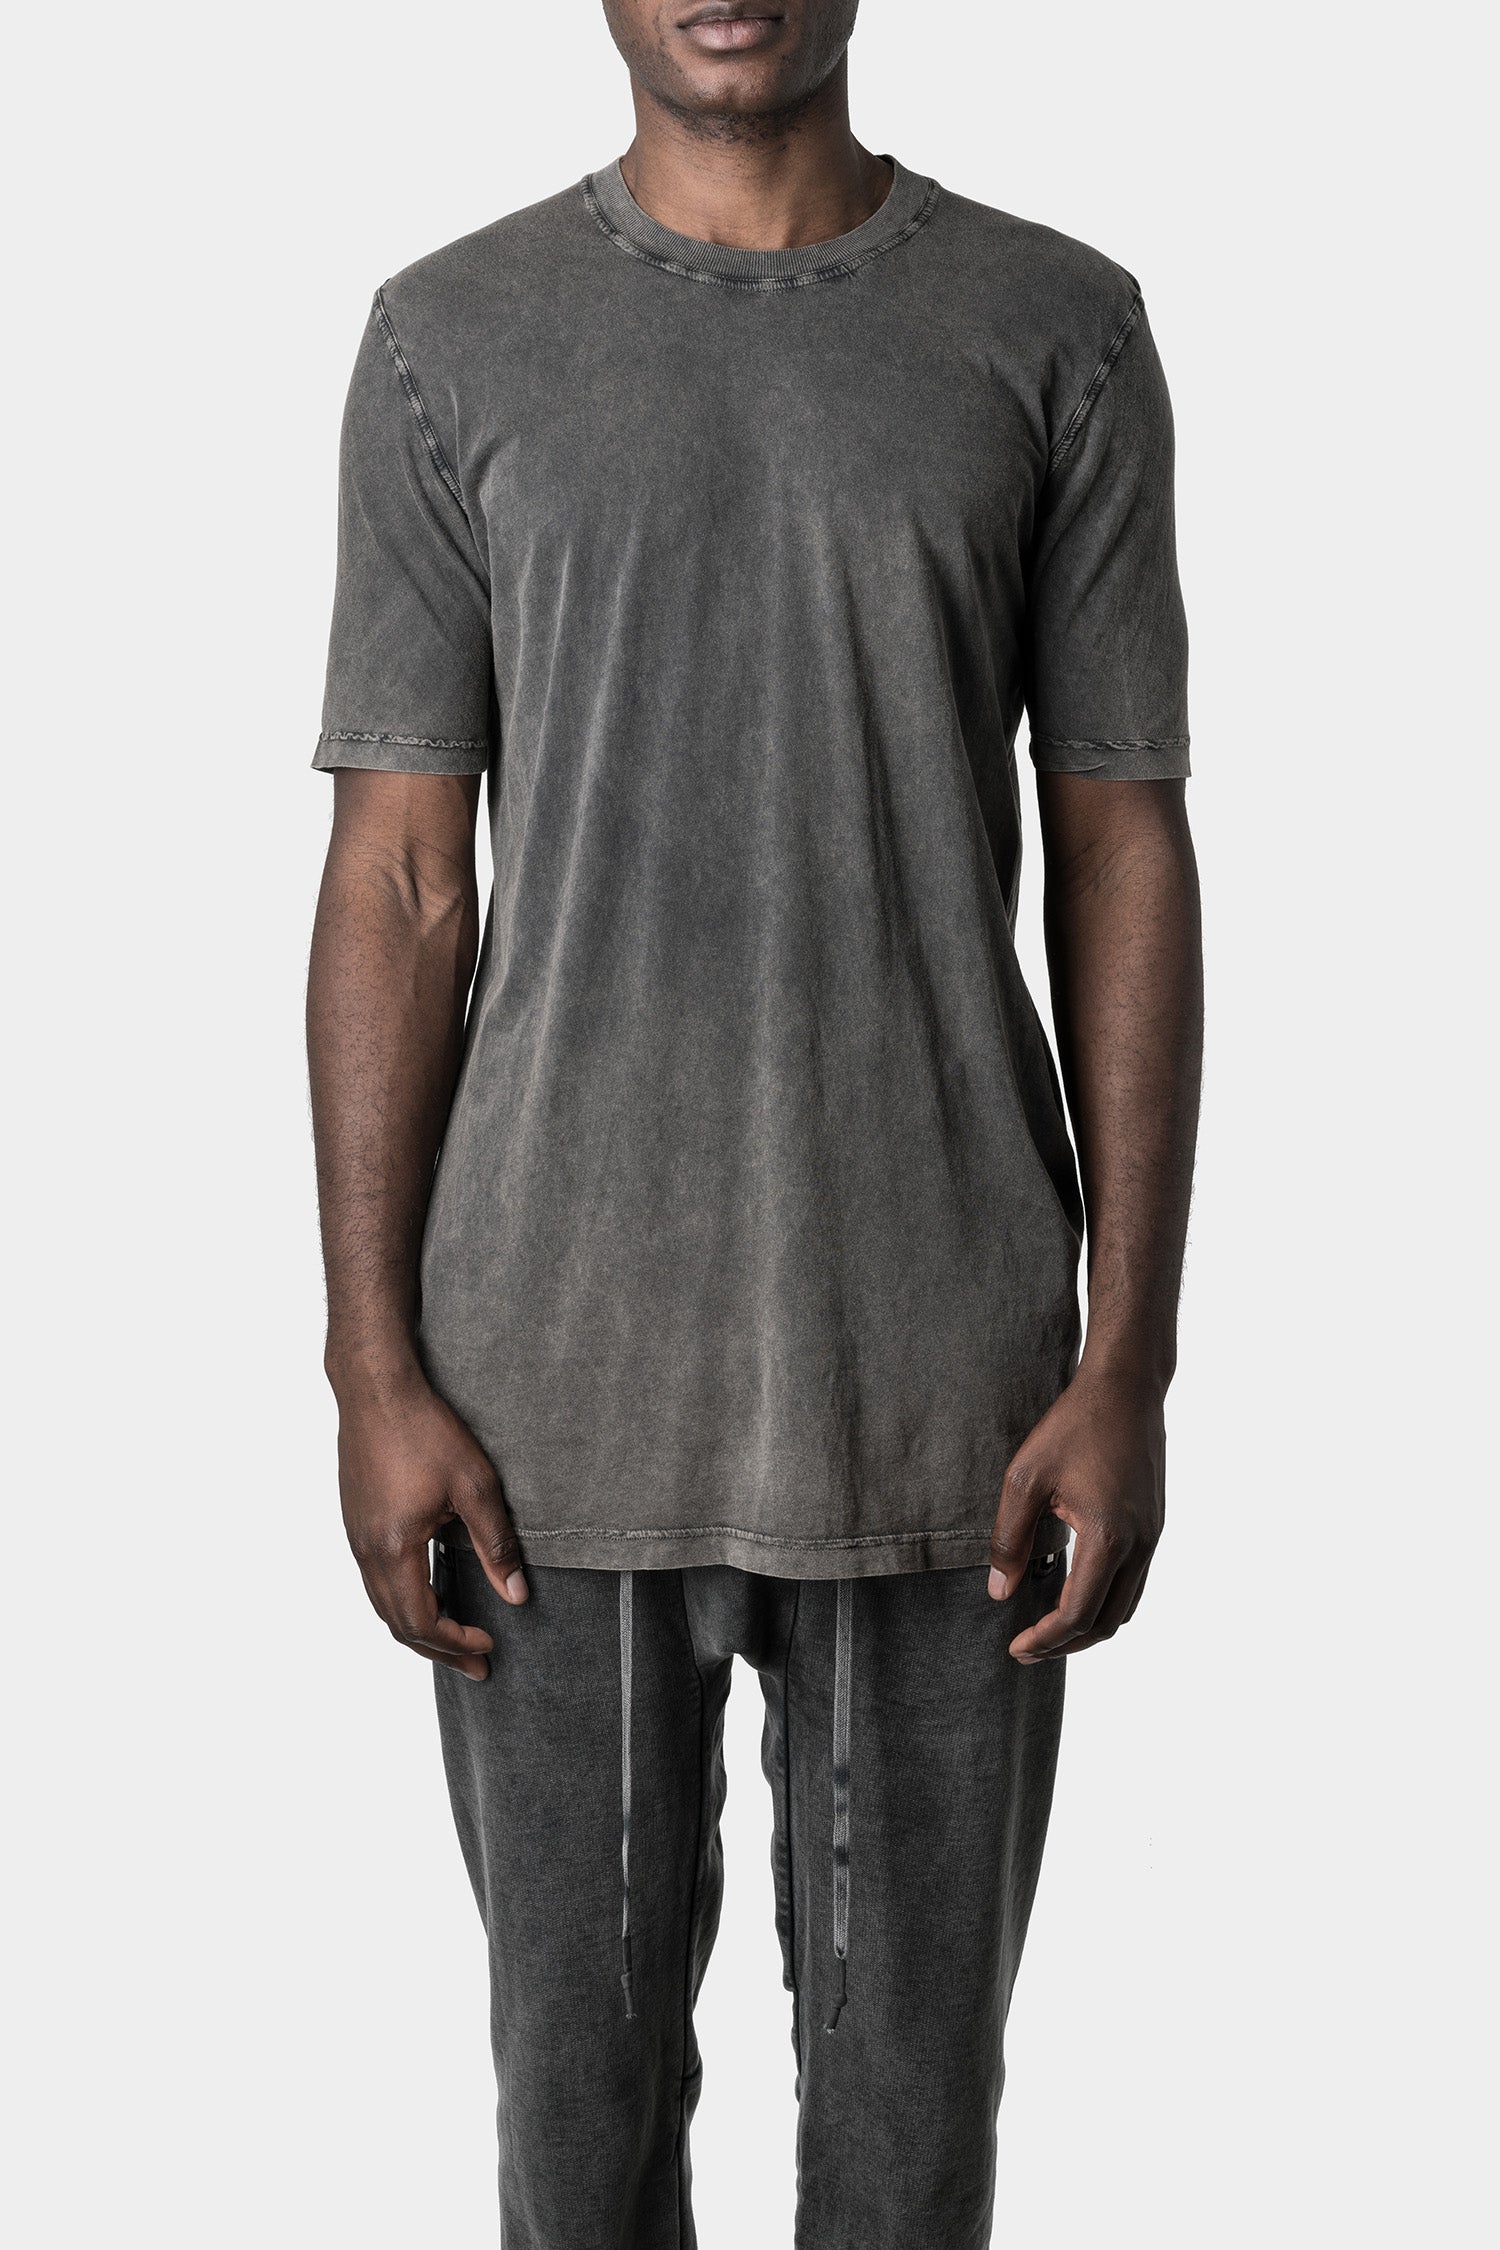 TS5 - T-shirt, Acid grey